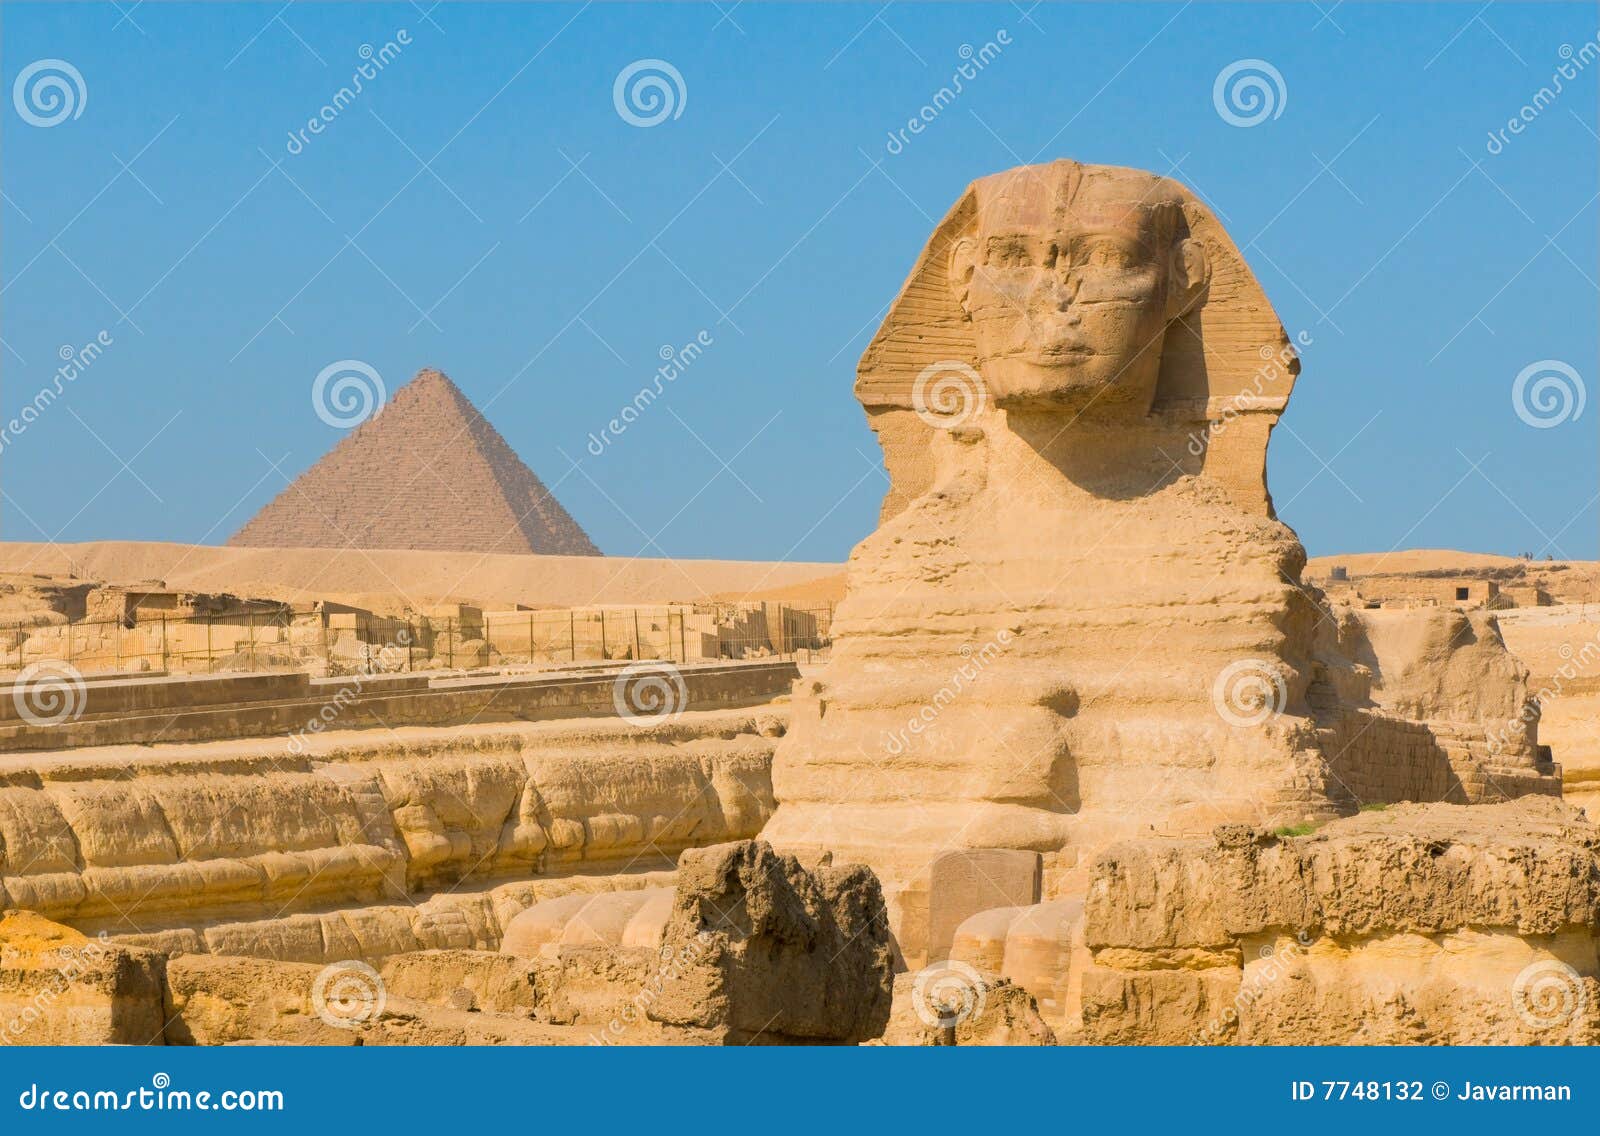 sphinx and pyramids at giza, cairo